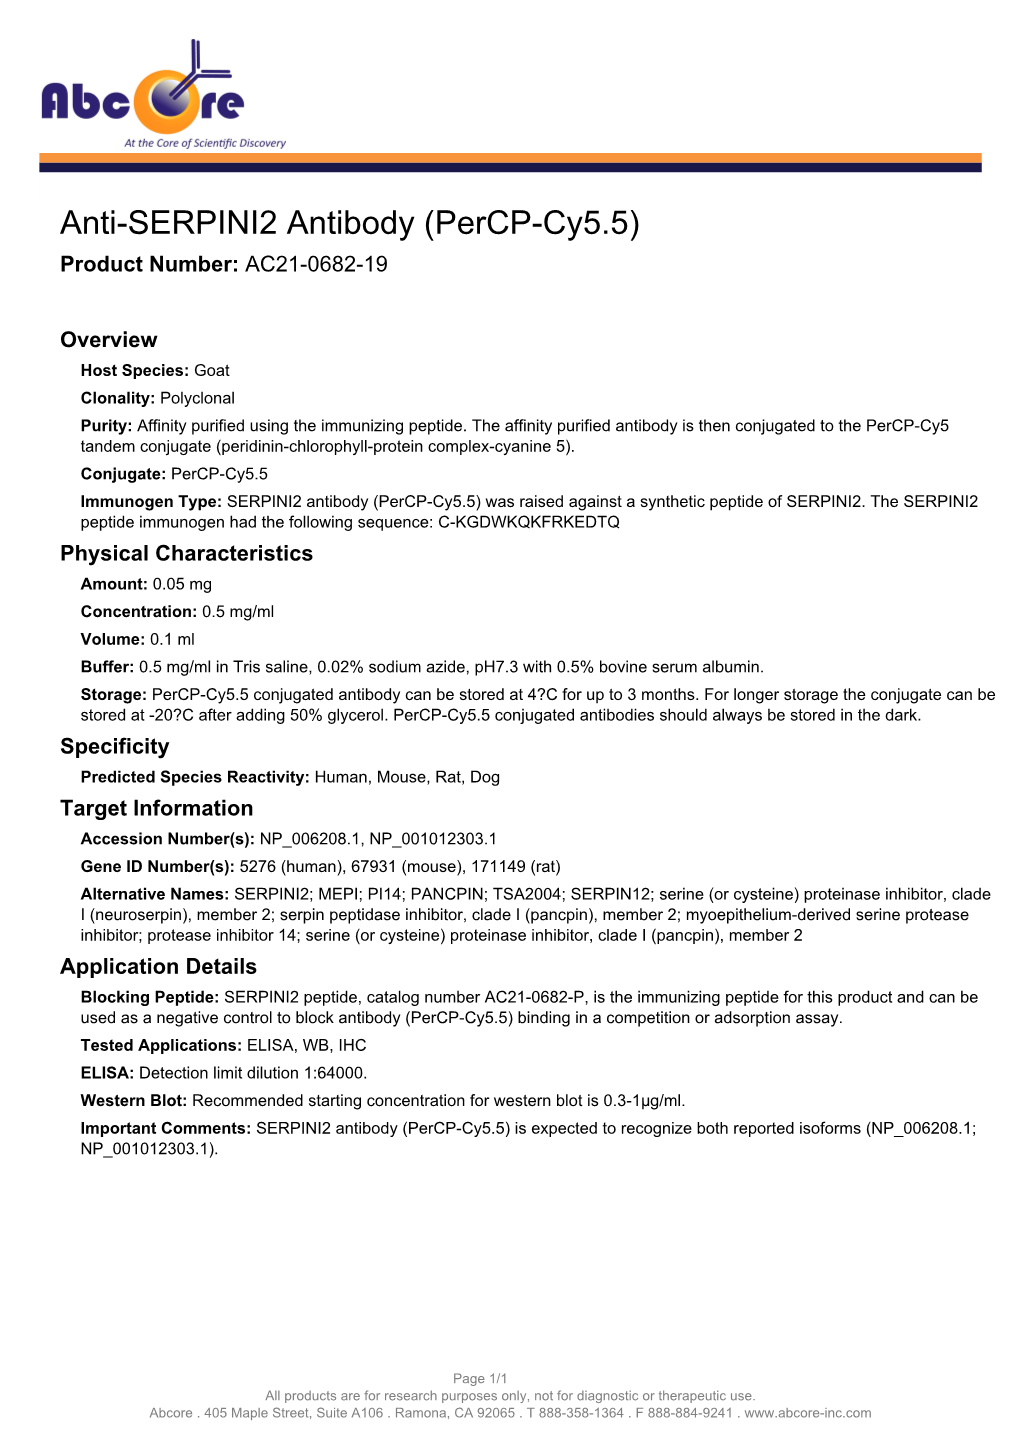 Anti-SERPINI2 Antibody (Percp-Cy5.5) Product Number: AC21-0682-19